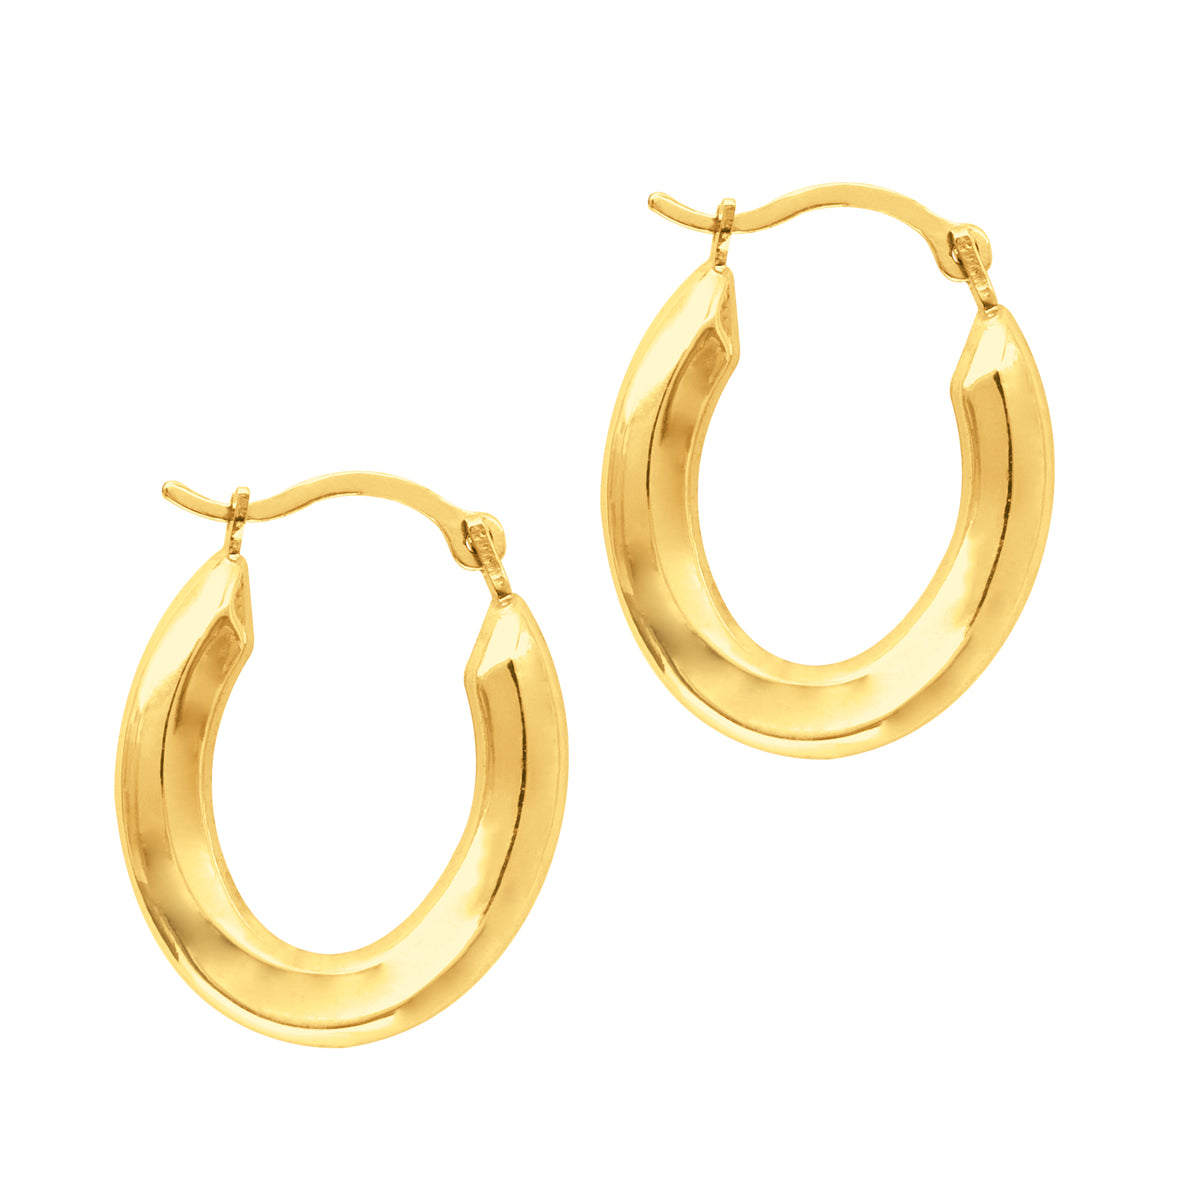 14K Yellow Gold Oval Shape Hoop Earrings, Diameter 20mm fine designer jewelry for men and women